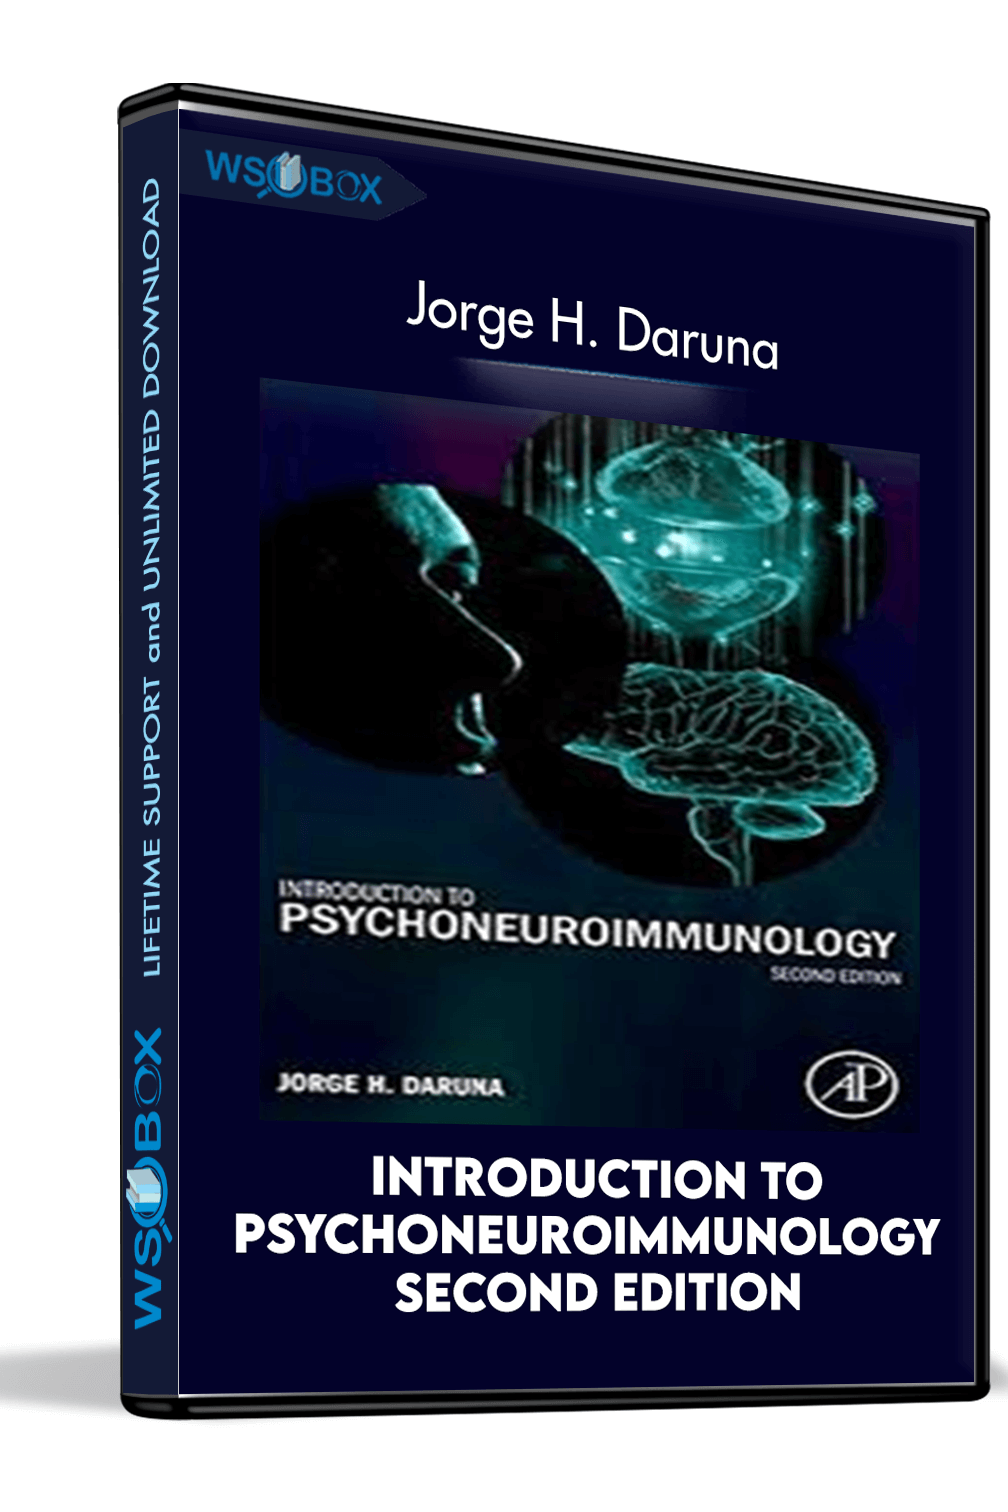 introduction-to-psychoneuroimmunology-second-edition-jorge-h-daruna